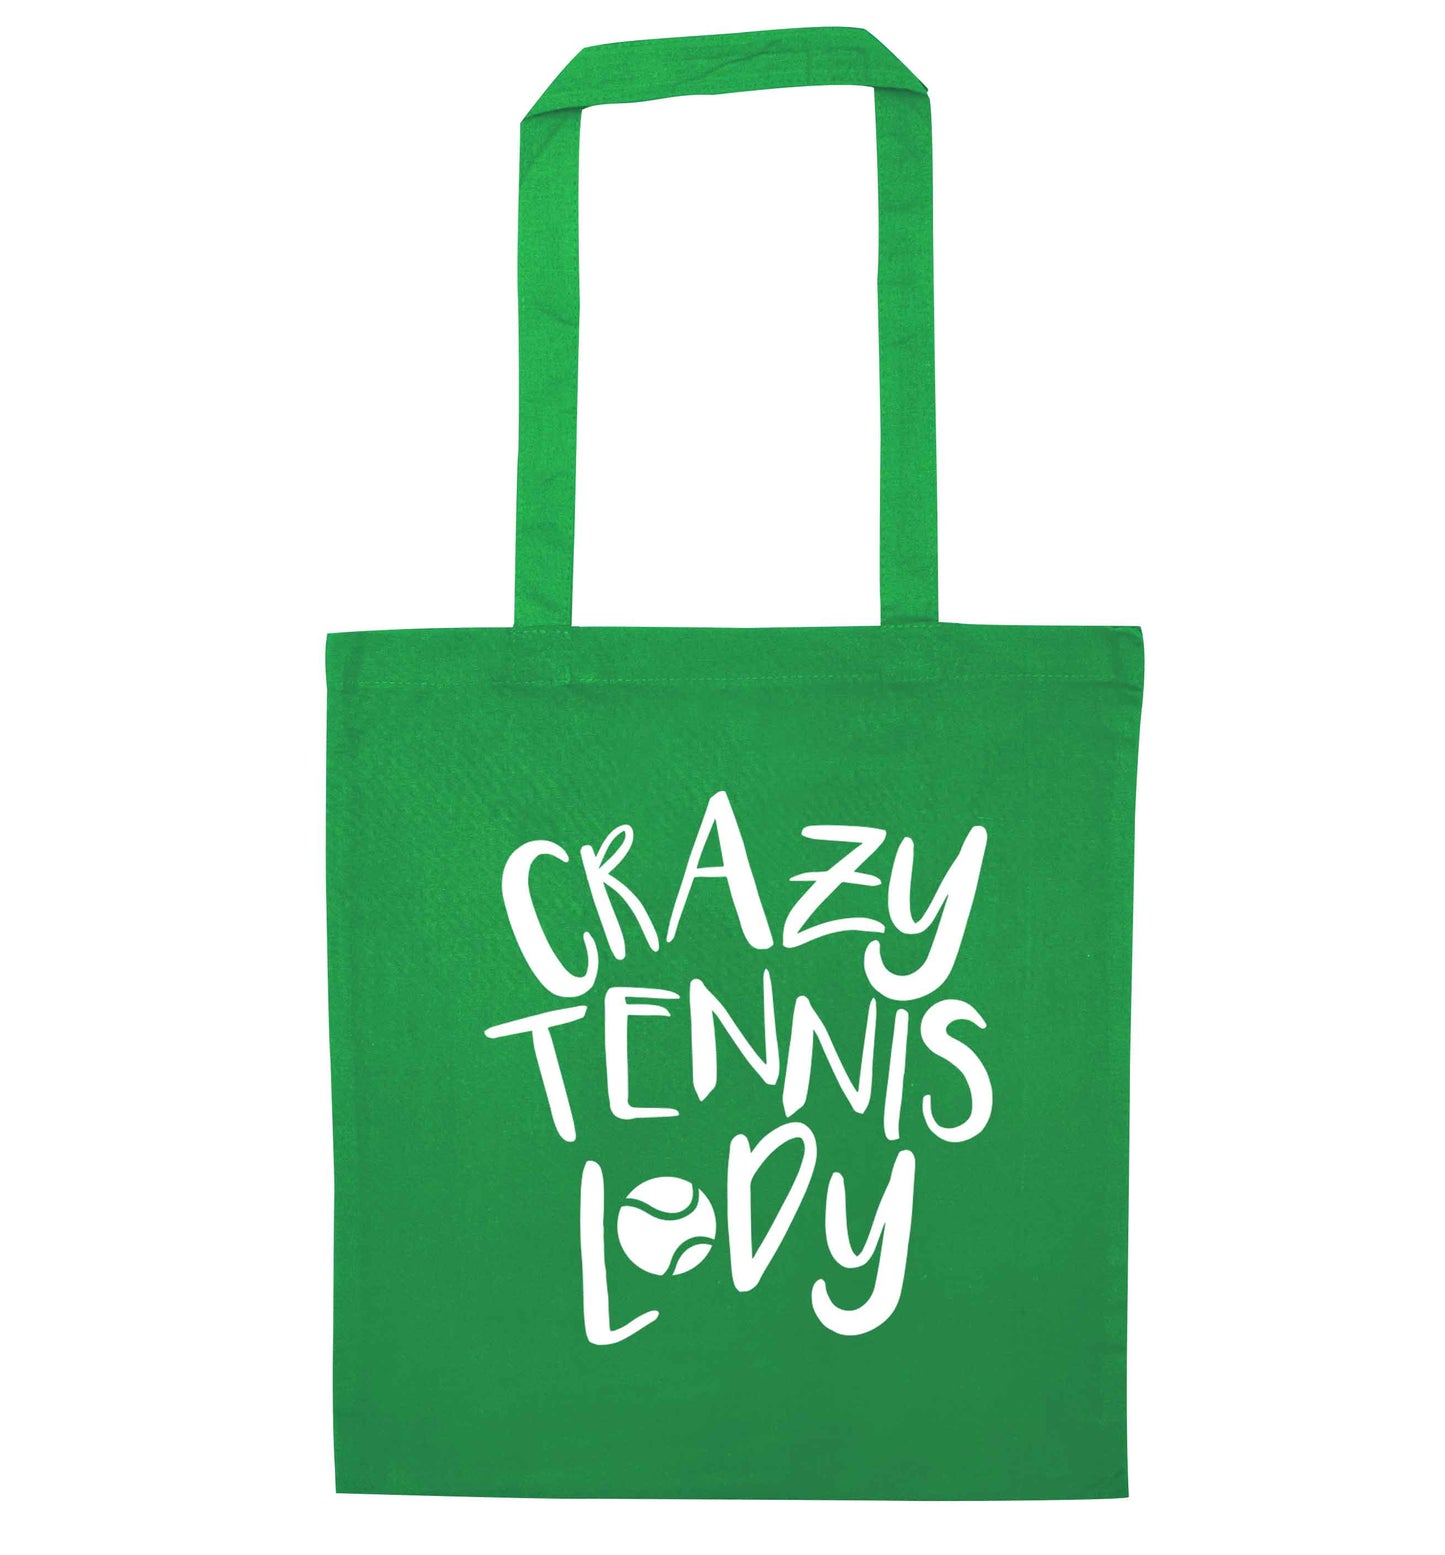 Crazy tennis lady green tote bag